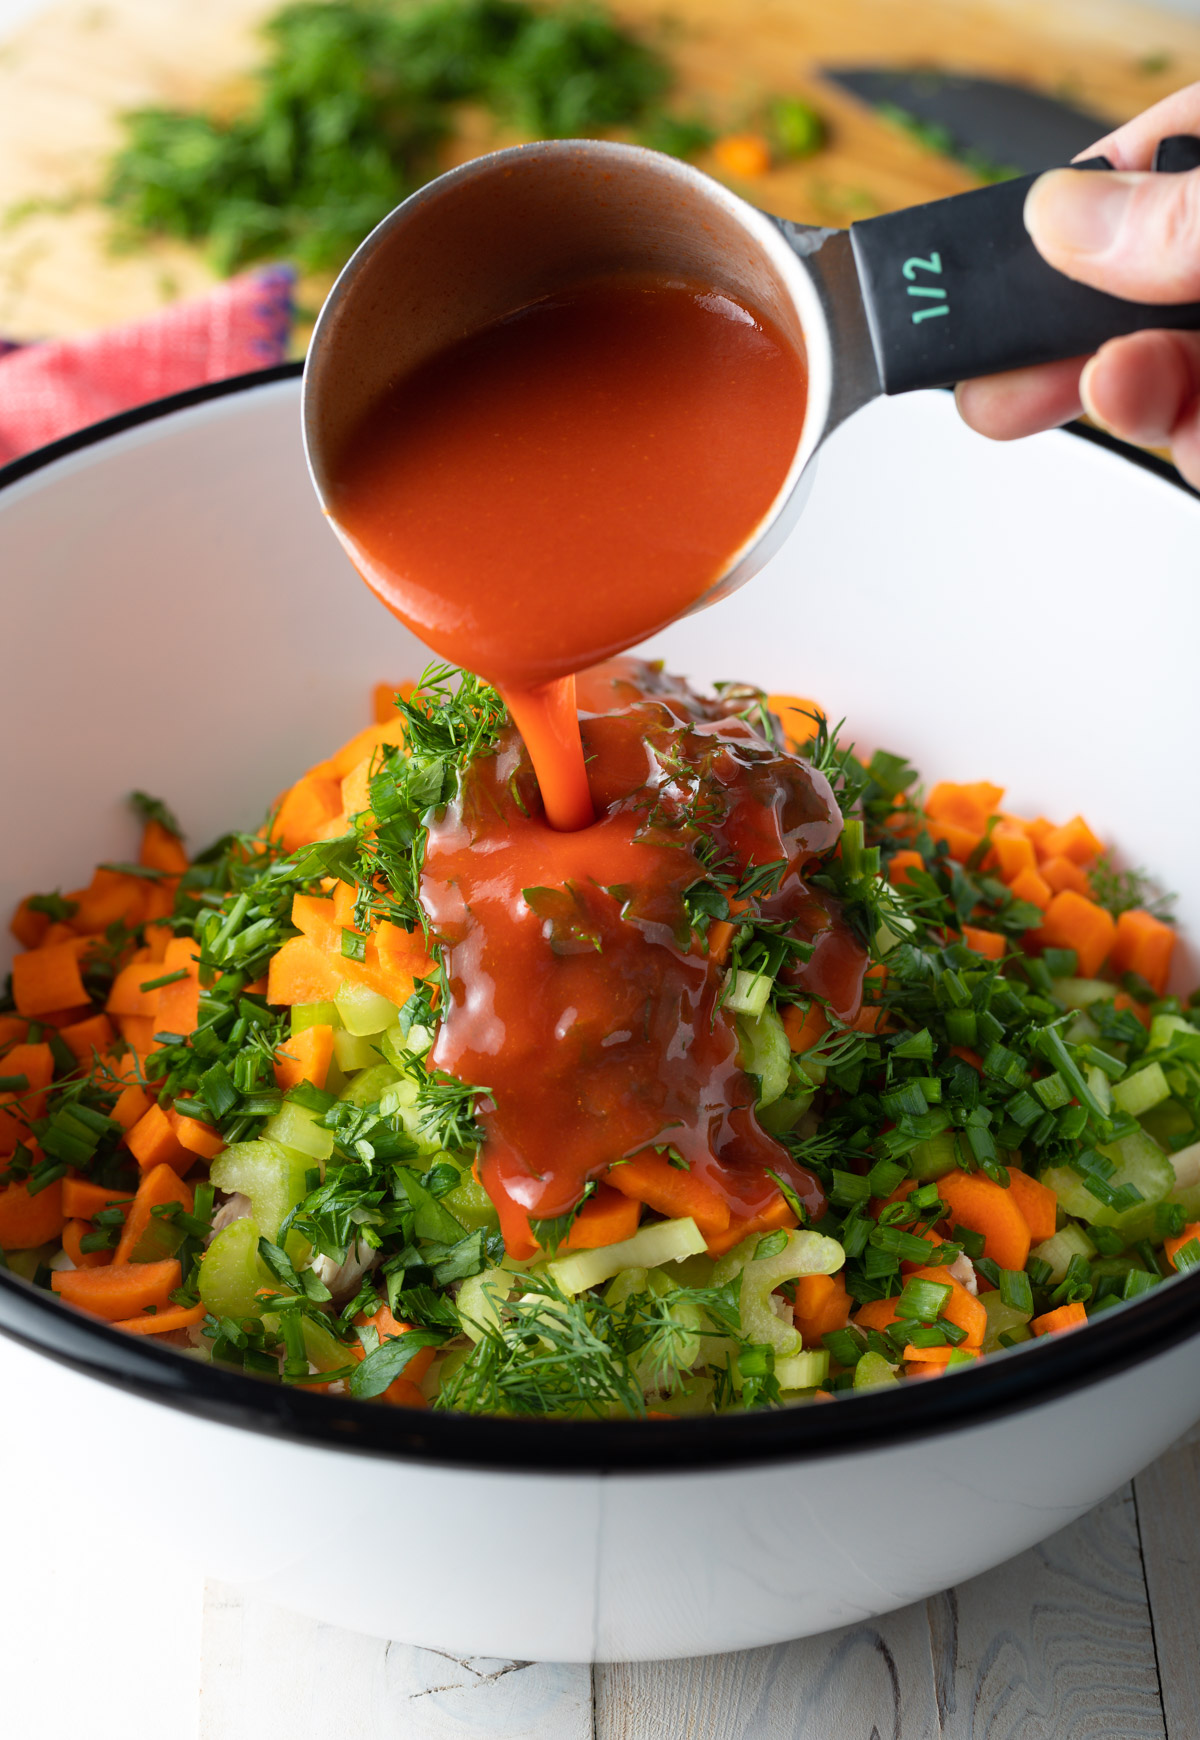 hot sauce, chopped veggies